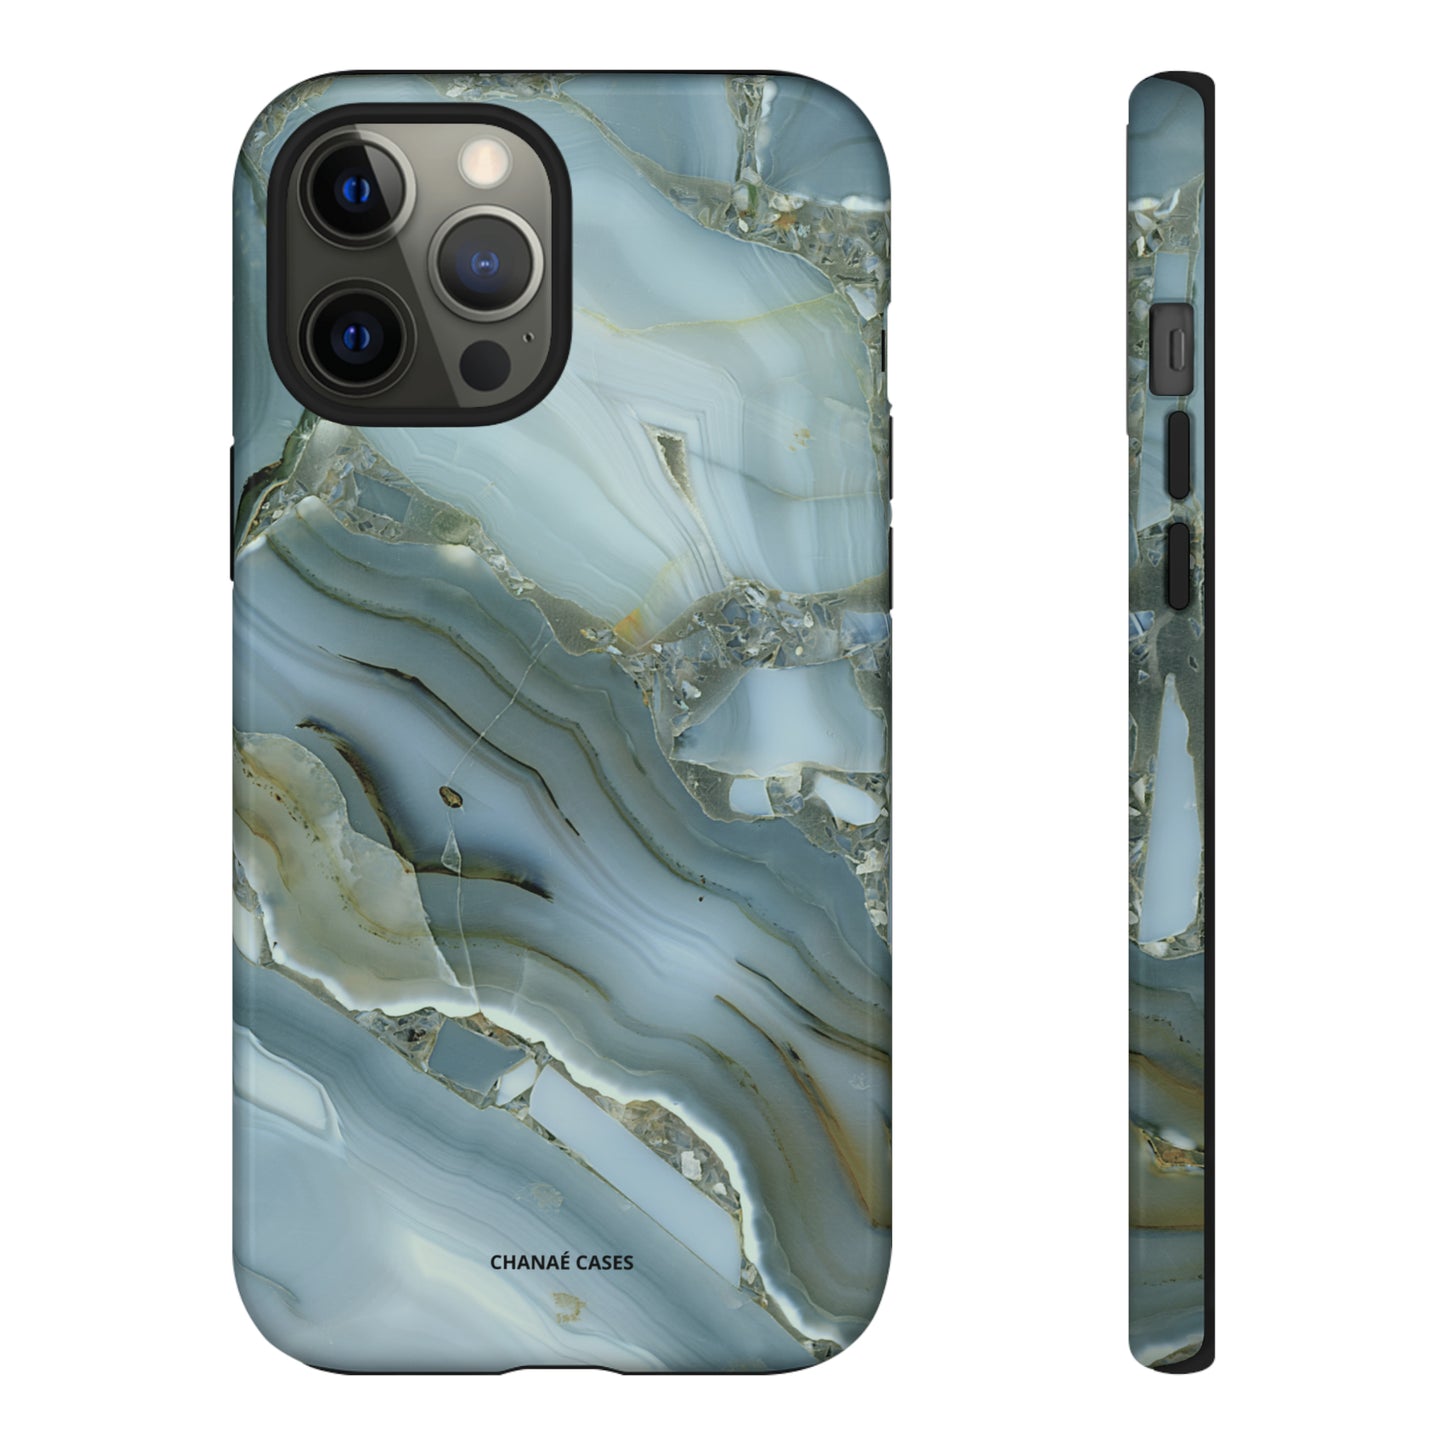 Yaru Marble iPhone "Tough" Case (Blue-Grey)